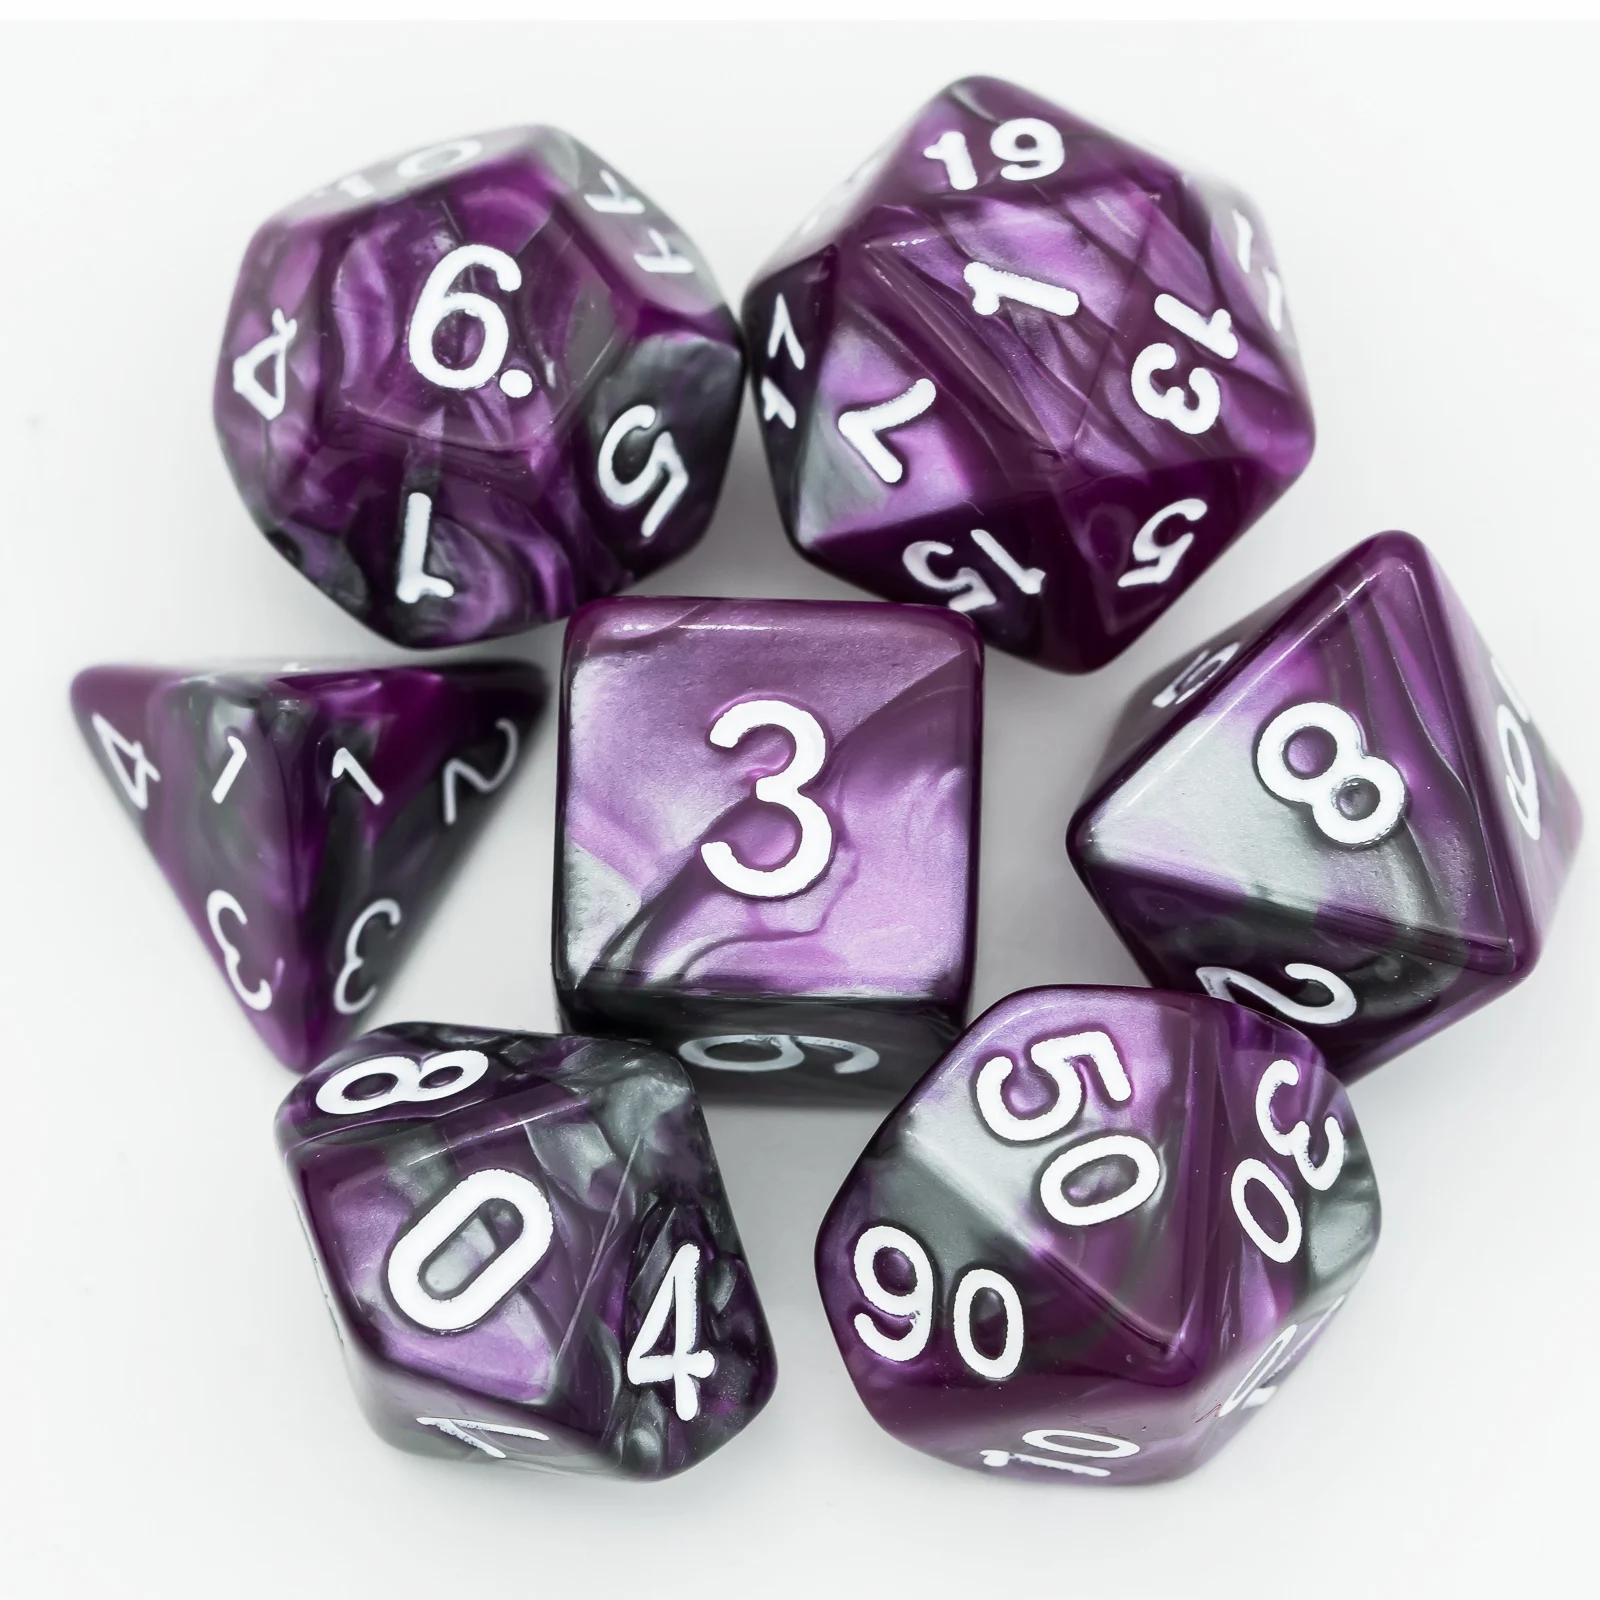 

Poludie 7Pcs/Set Purple/Silver DND Dice Set D4 D6 D8 D10 D% D12 D20 Polyhedral Dice for Role Playing Board Game D&D RPG MTG Dice